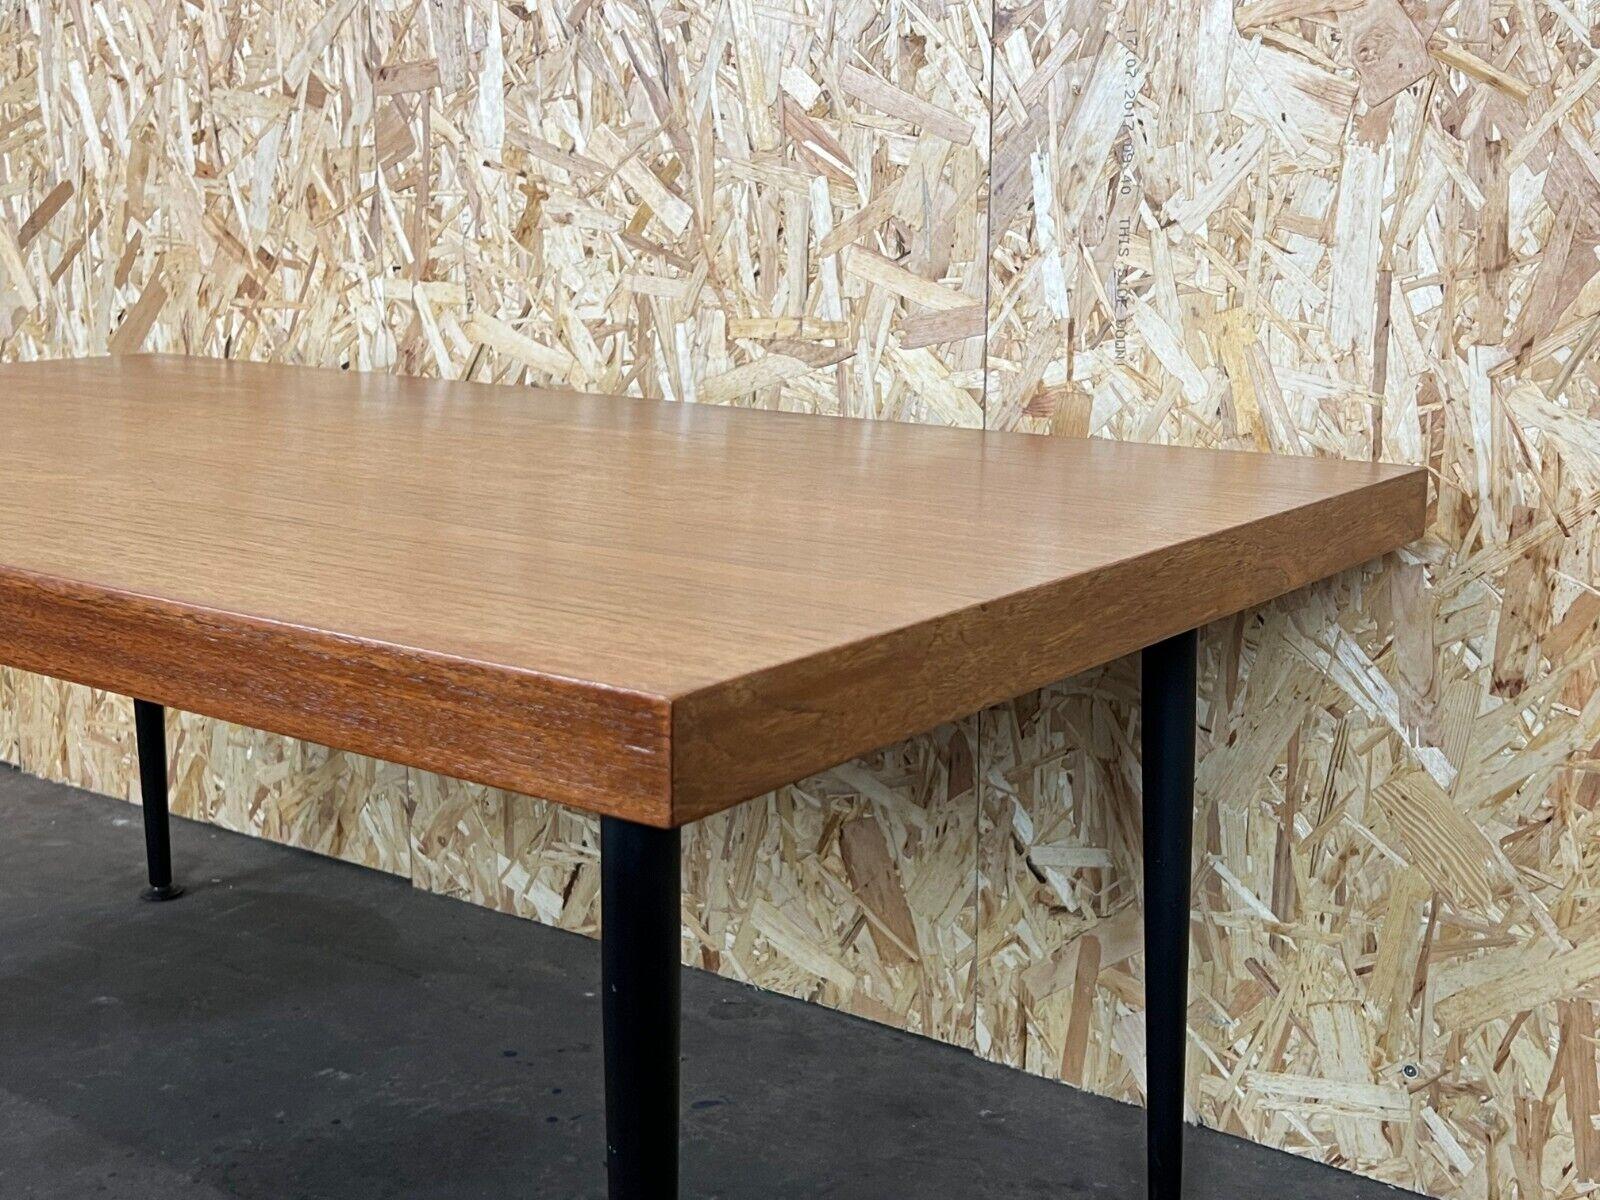 1960s-1970s Teak Coffee Table Side Table Ilse Möbel Danish Modern Design For Sale 5